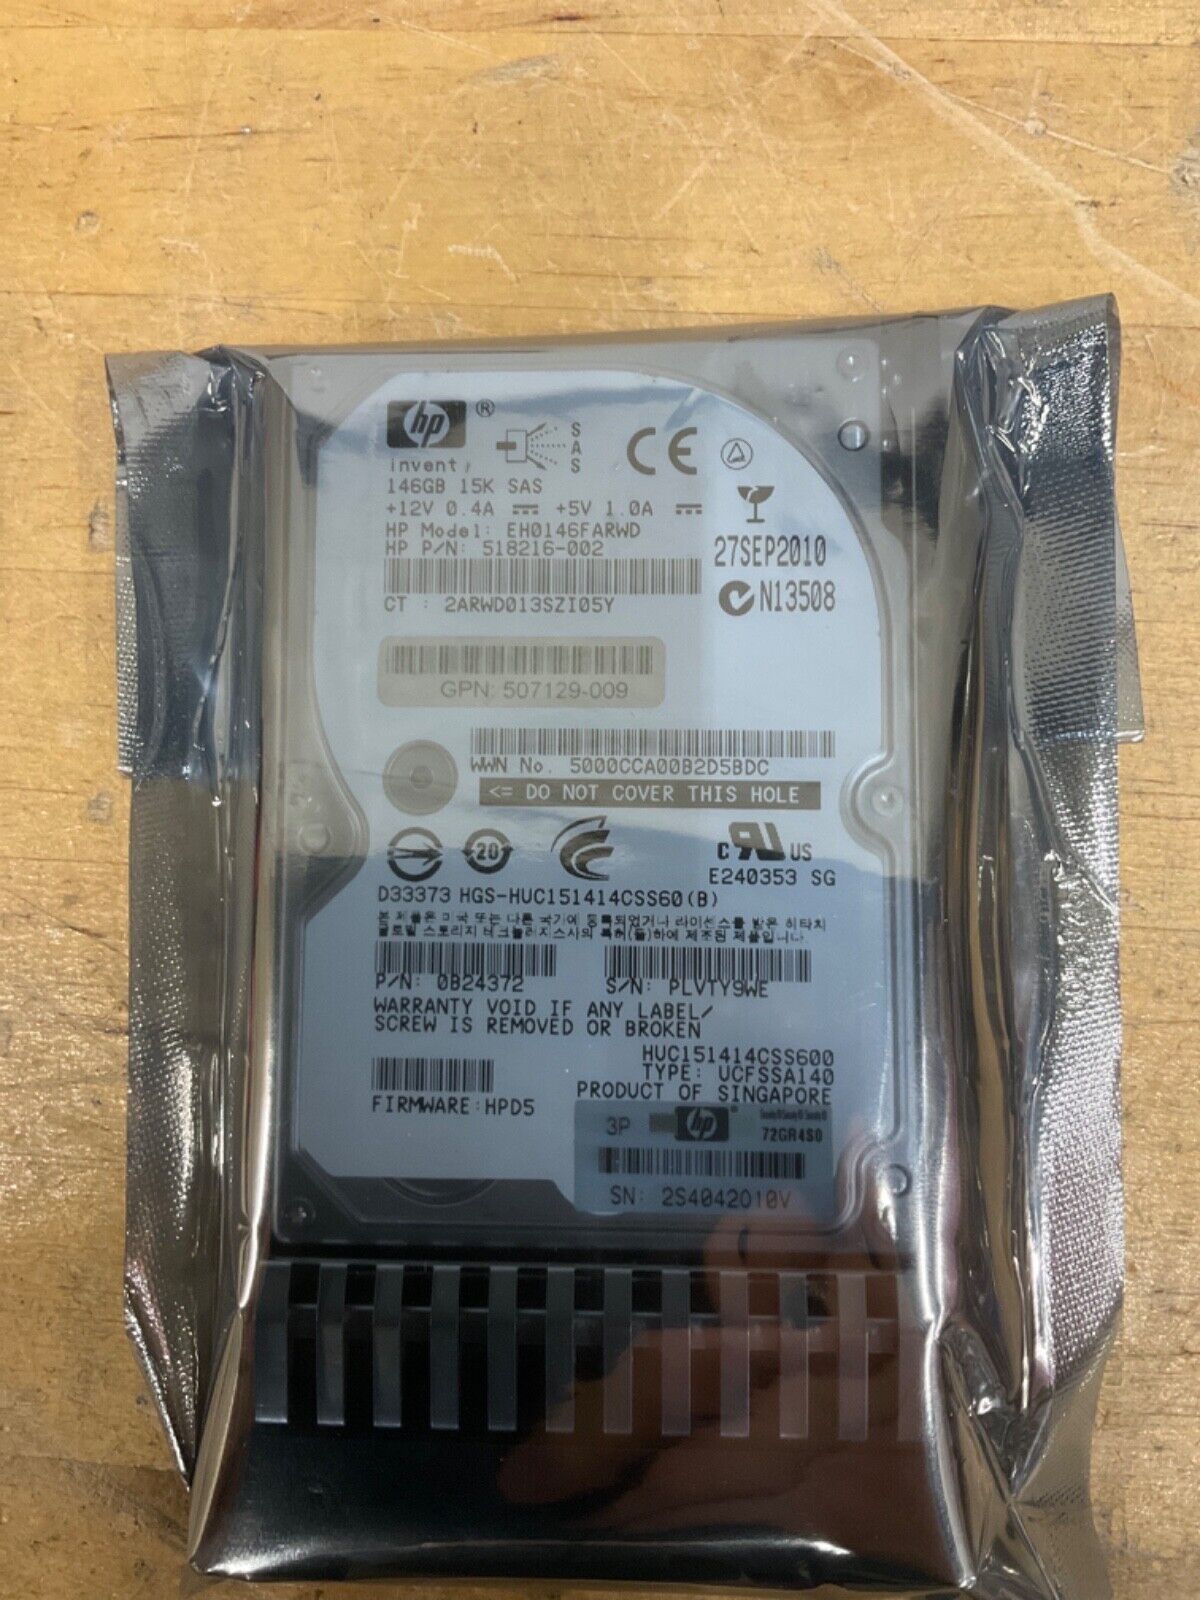 HP 146GB 15K SAS EH0146FARWD 518216-002.